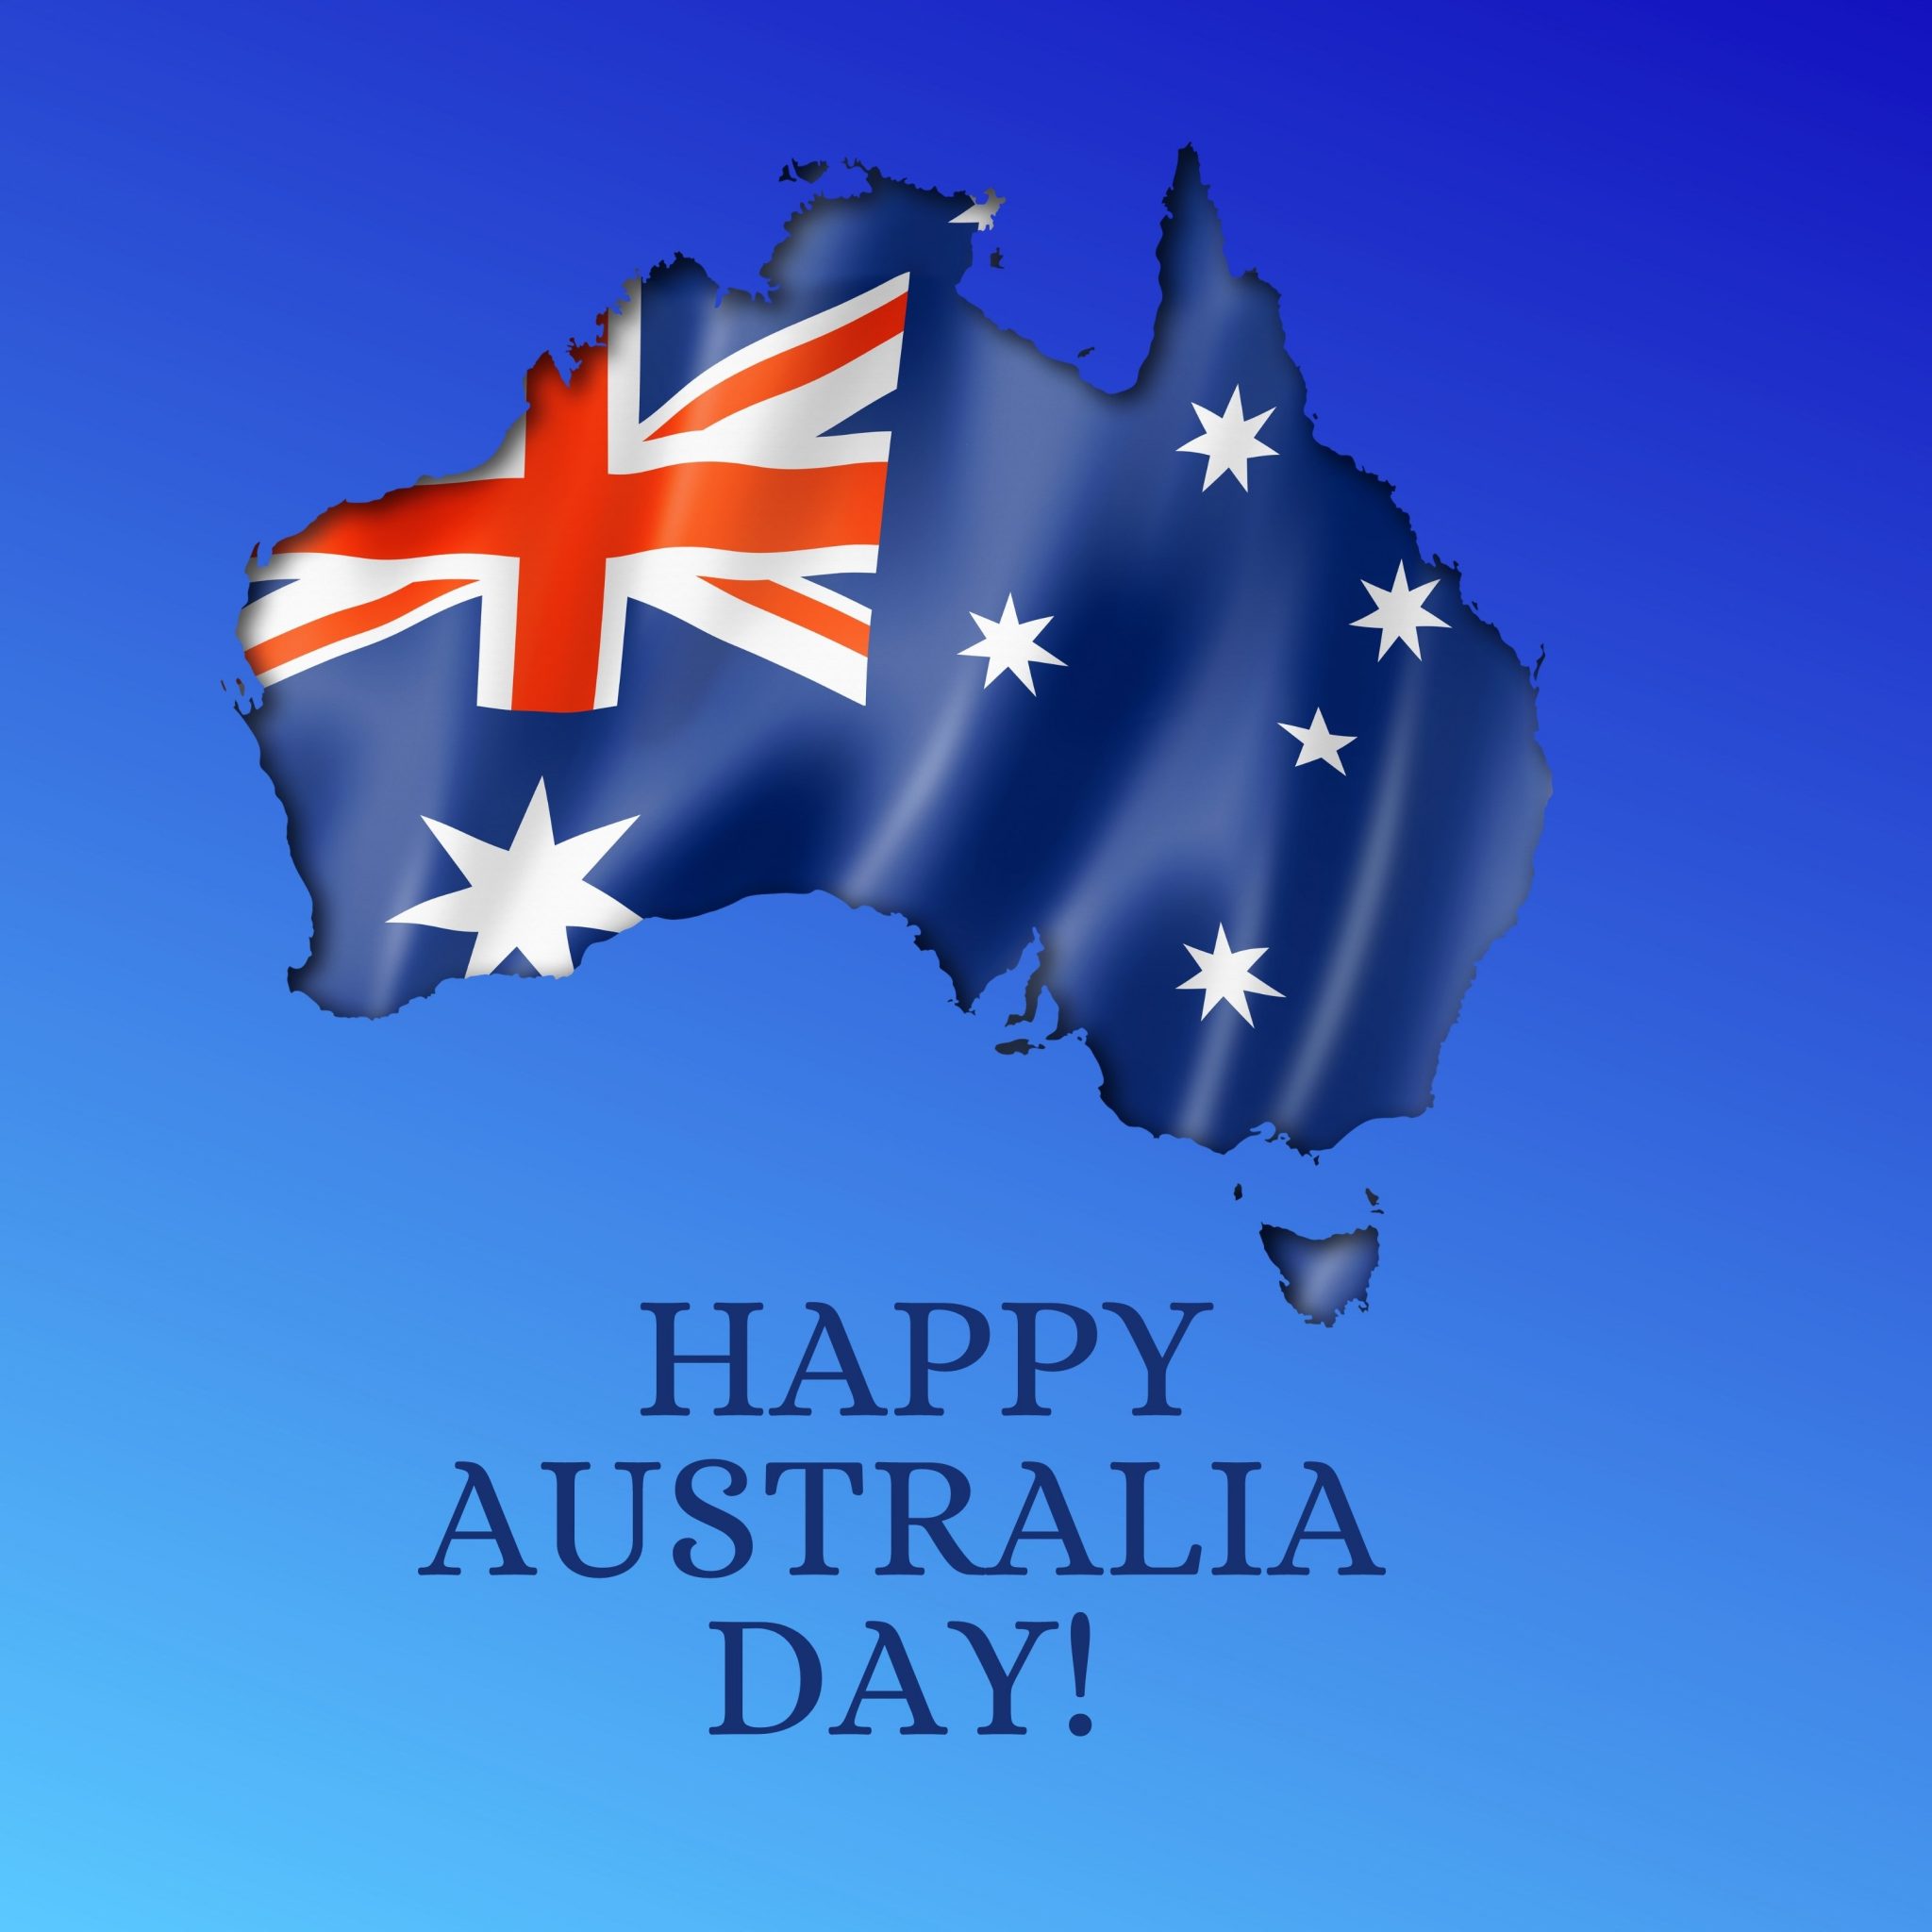 2048x2048 wallpapers iPad retina Happy Australia Day iPad Wallpaper 2048x2048 pixels resolution